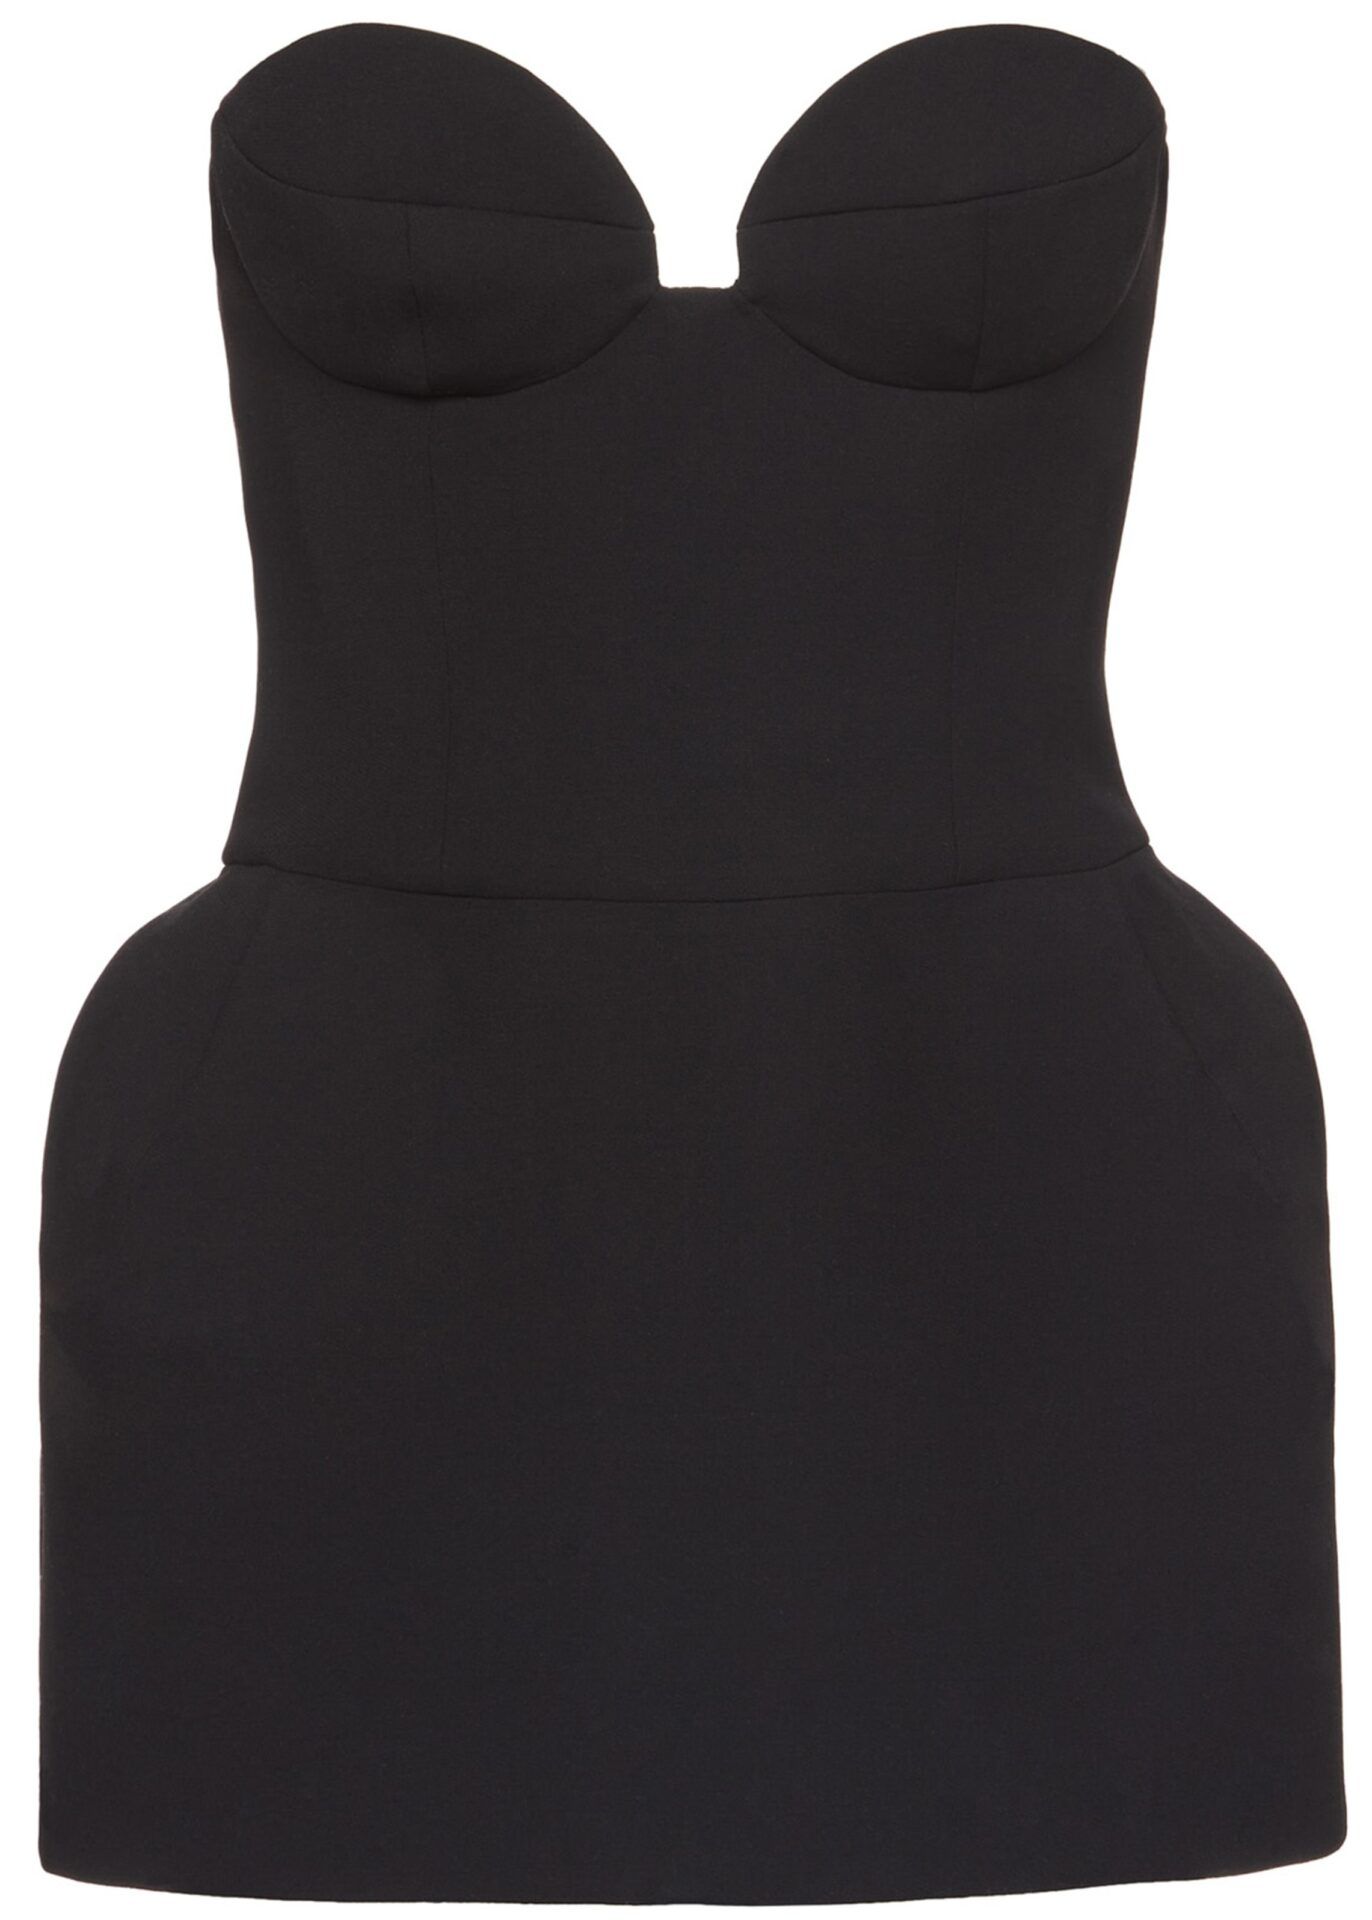 Dress (Black Strapless) | style